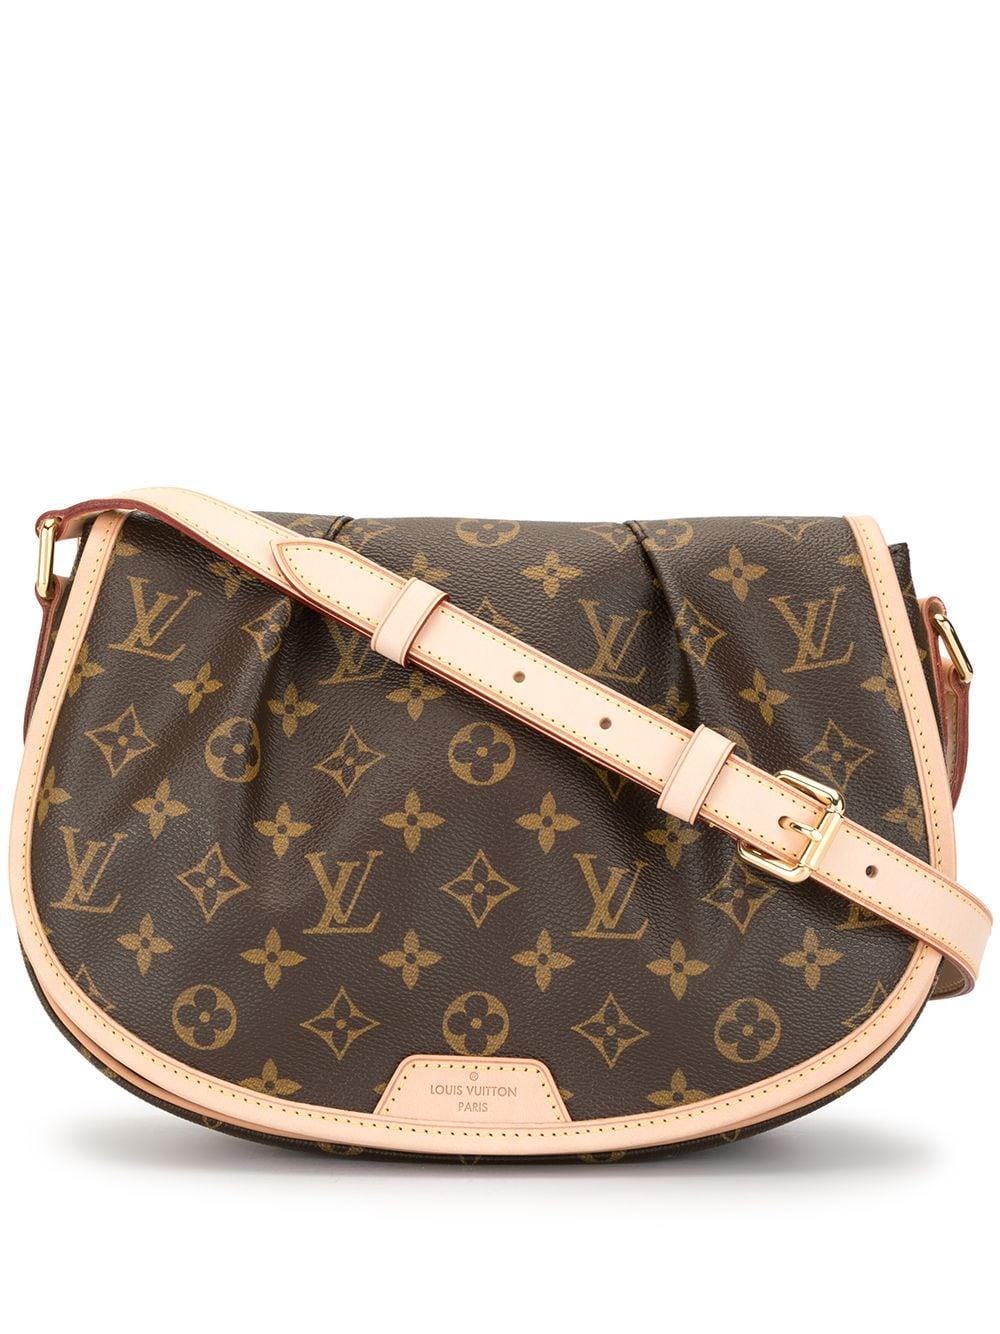 Louis Vuitton 2013 Menilmontant Pm Shoulder Bag in Brown | Lyst